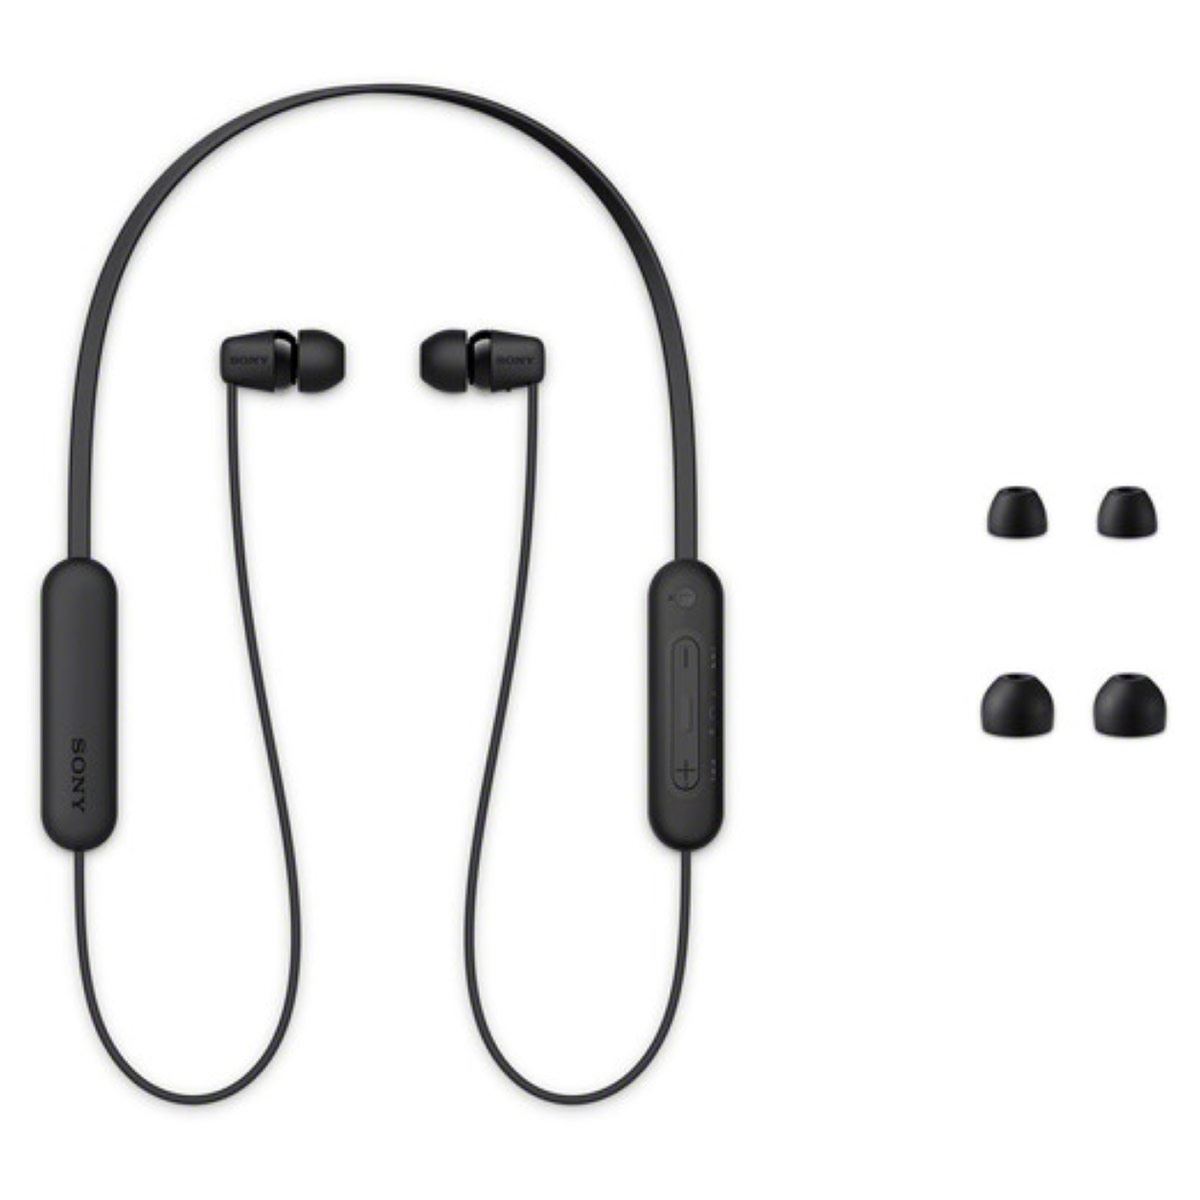  Sony WH-1000XM4 Auriculares inalámbricos Bluetooth con  cancelación de ruido sobre la oreja (negro) paquete de auriculares  inalámbricos intrauditivos – Portátil, batería de larga duración, carga :  Electrónica